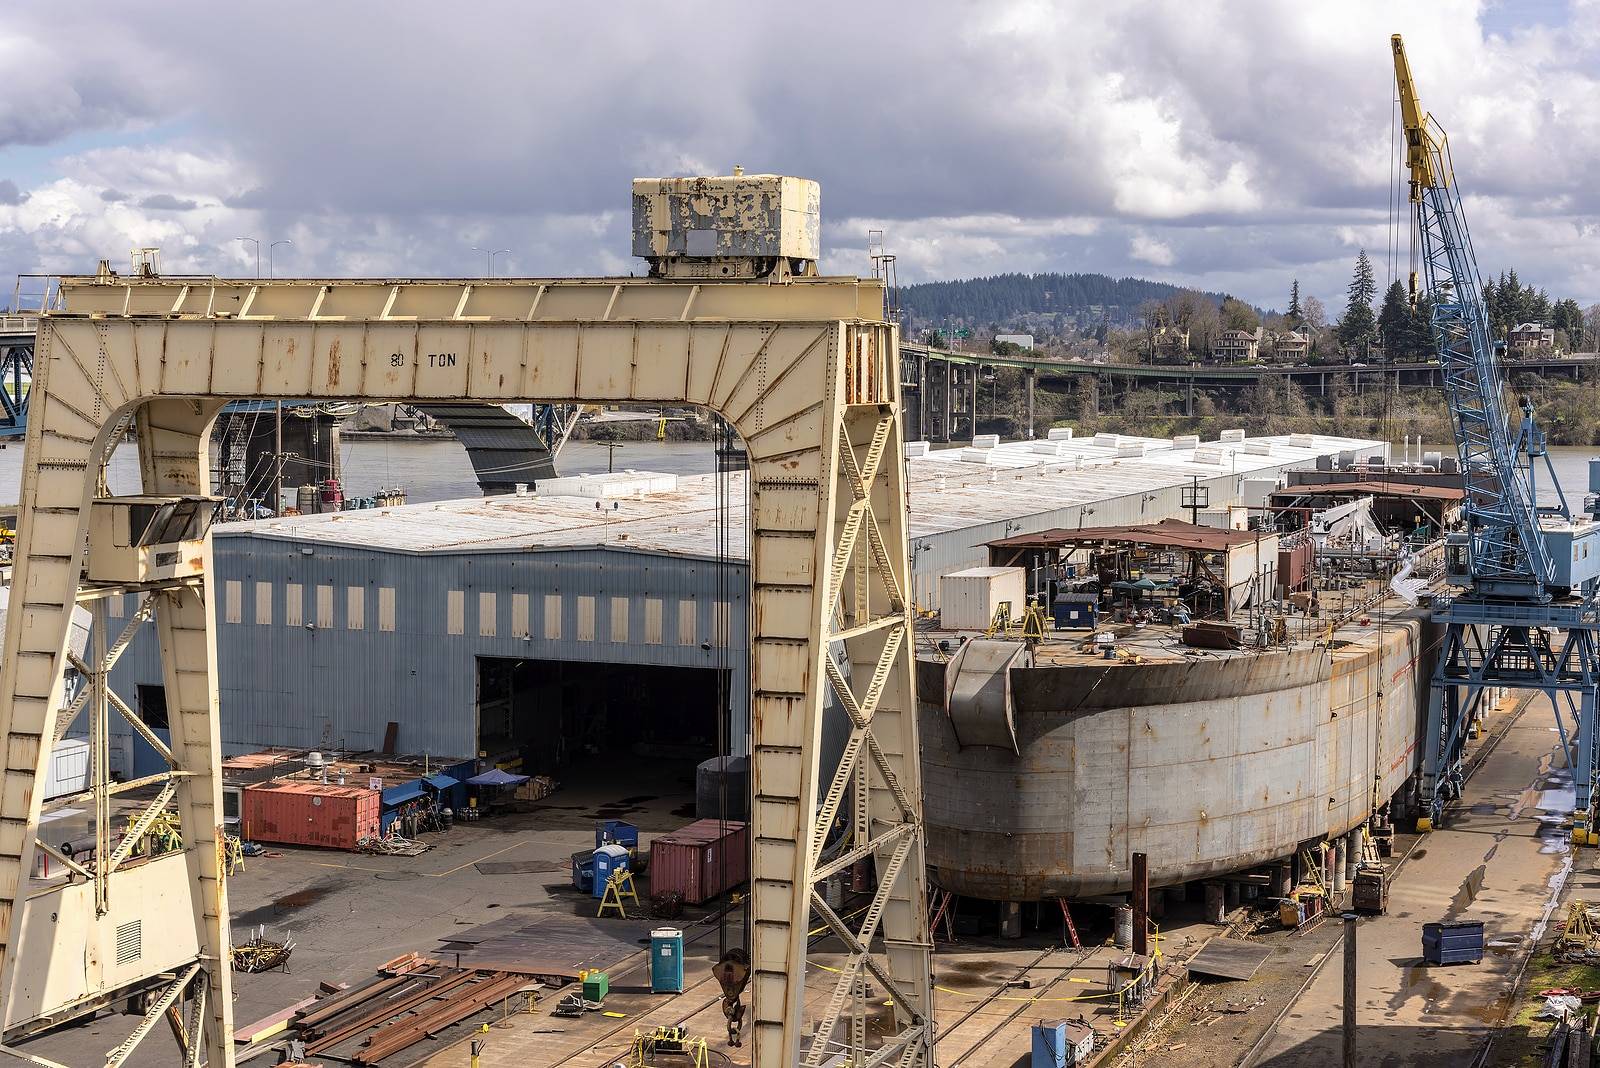 Shipyard and barge building in Portland Oregon.